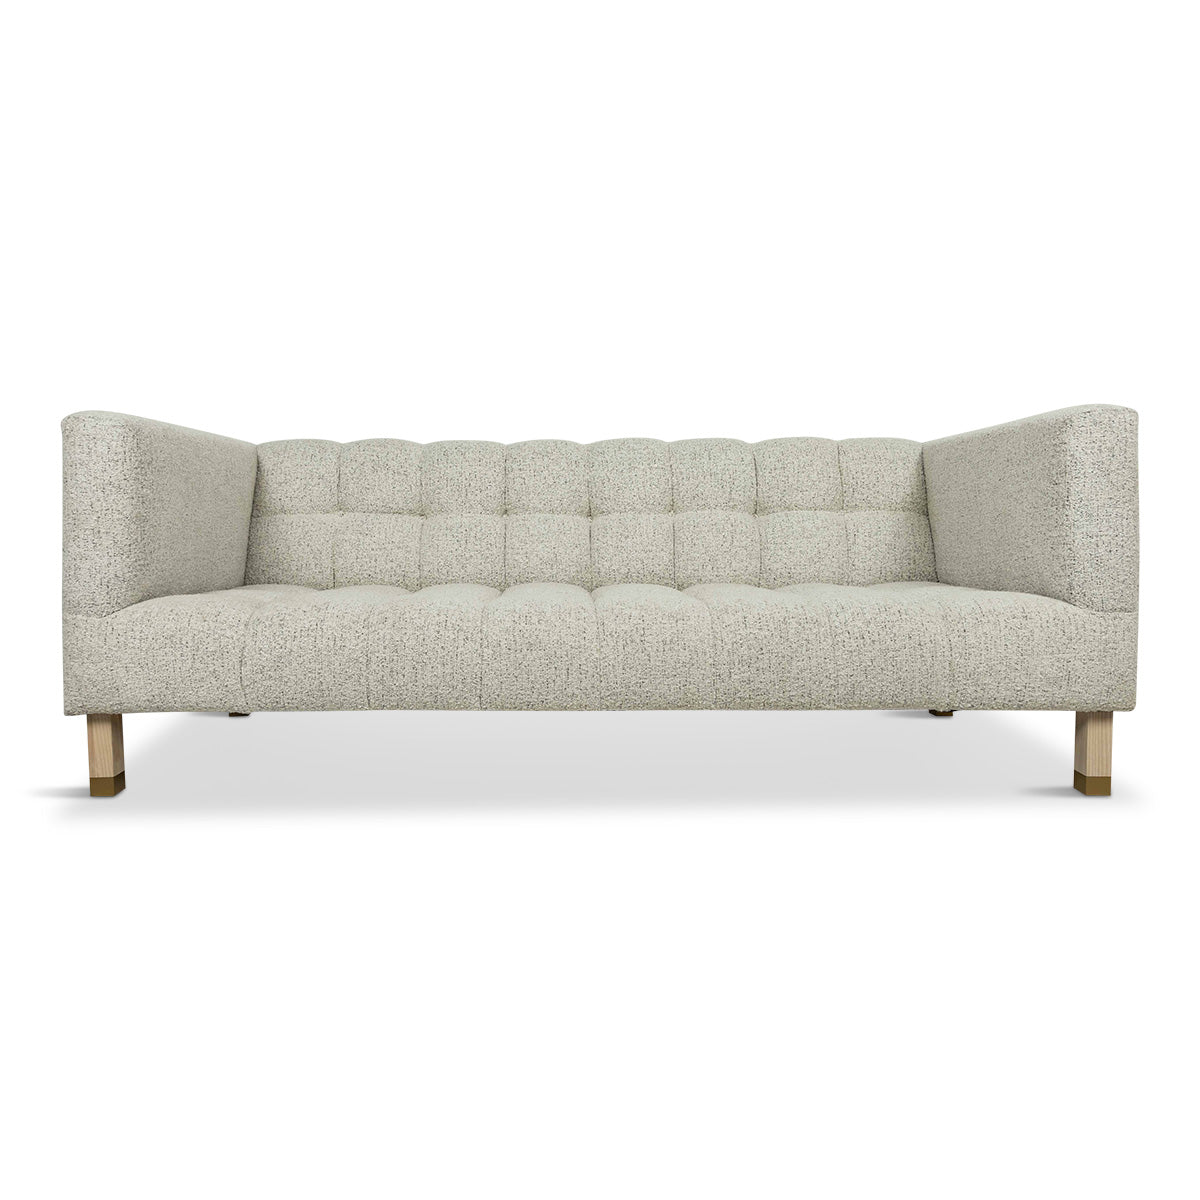 Delano 2 Sofa in White Textured Linen